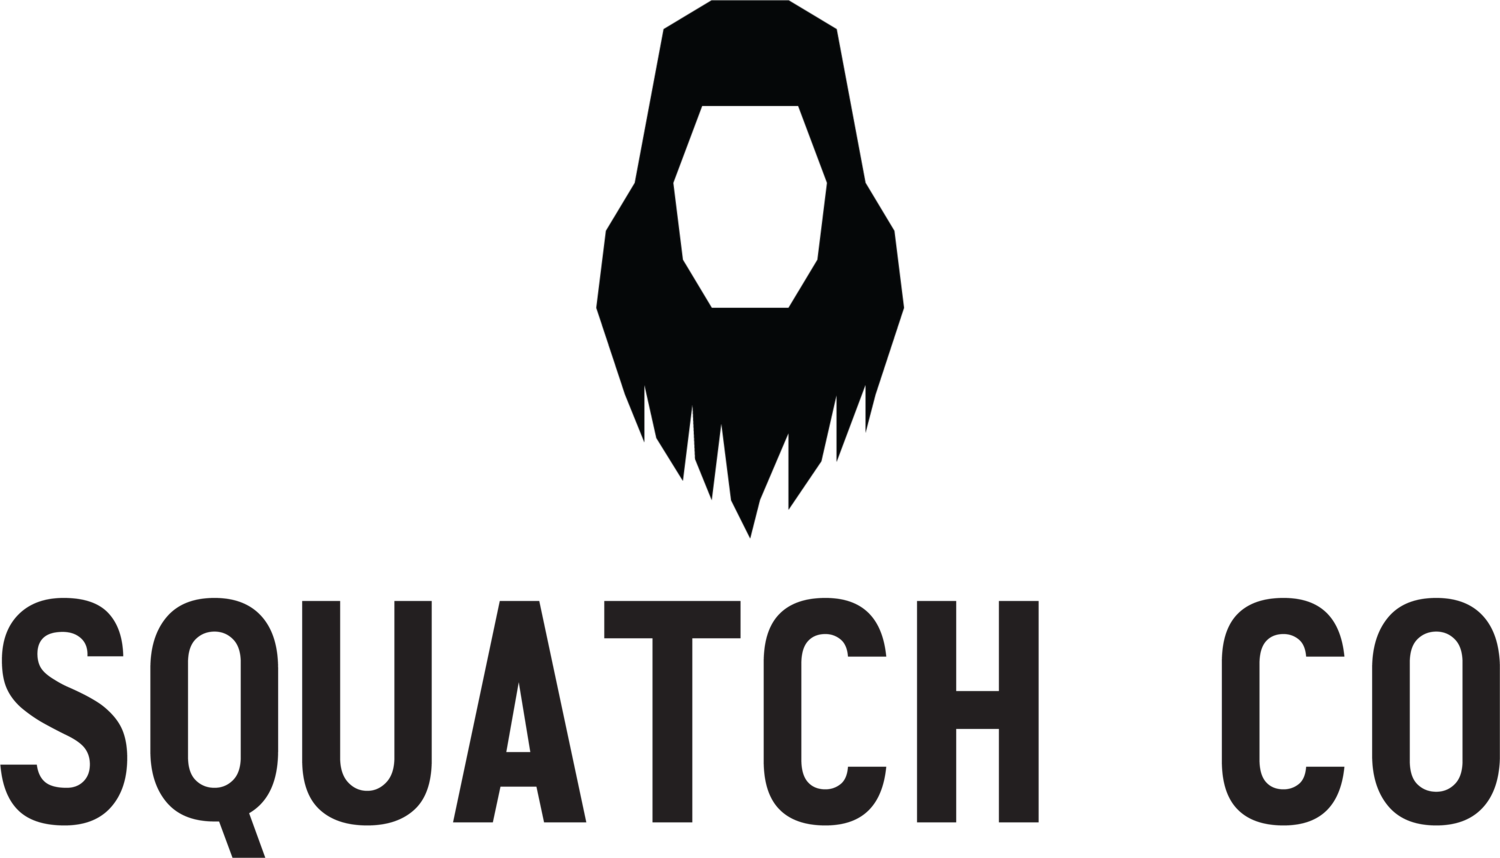 Squatch Co